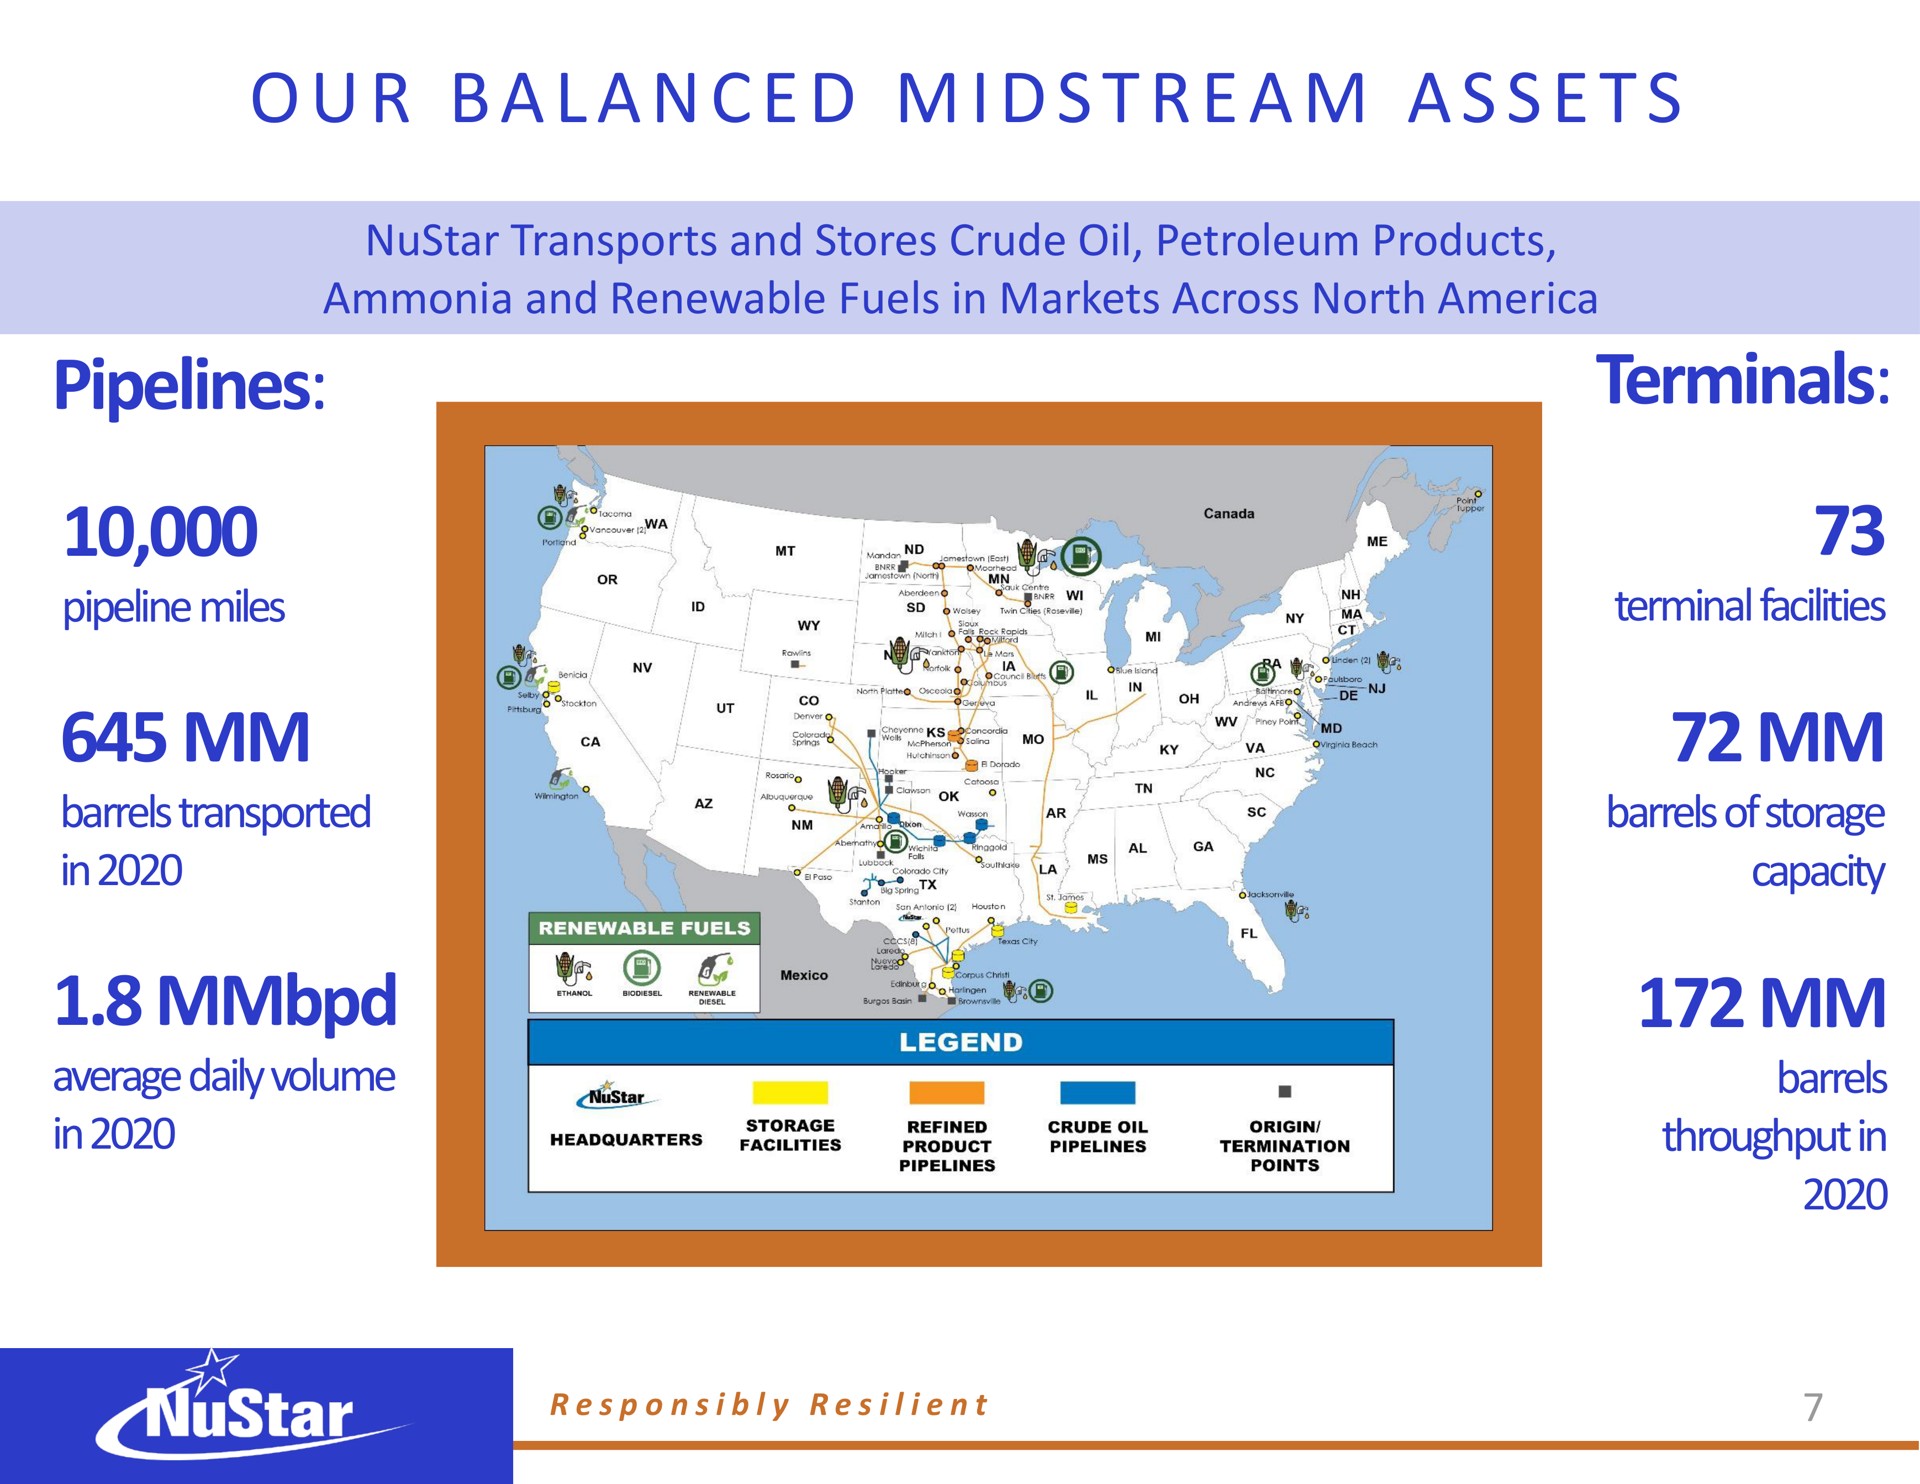 a a i a a pipelines terminals our balanced midstream assets mim | NuStar Energy